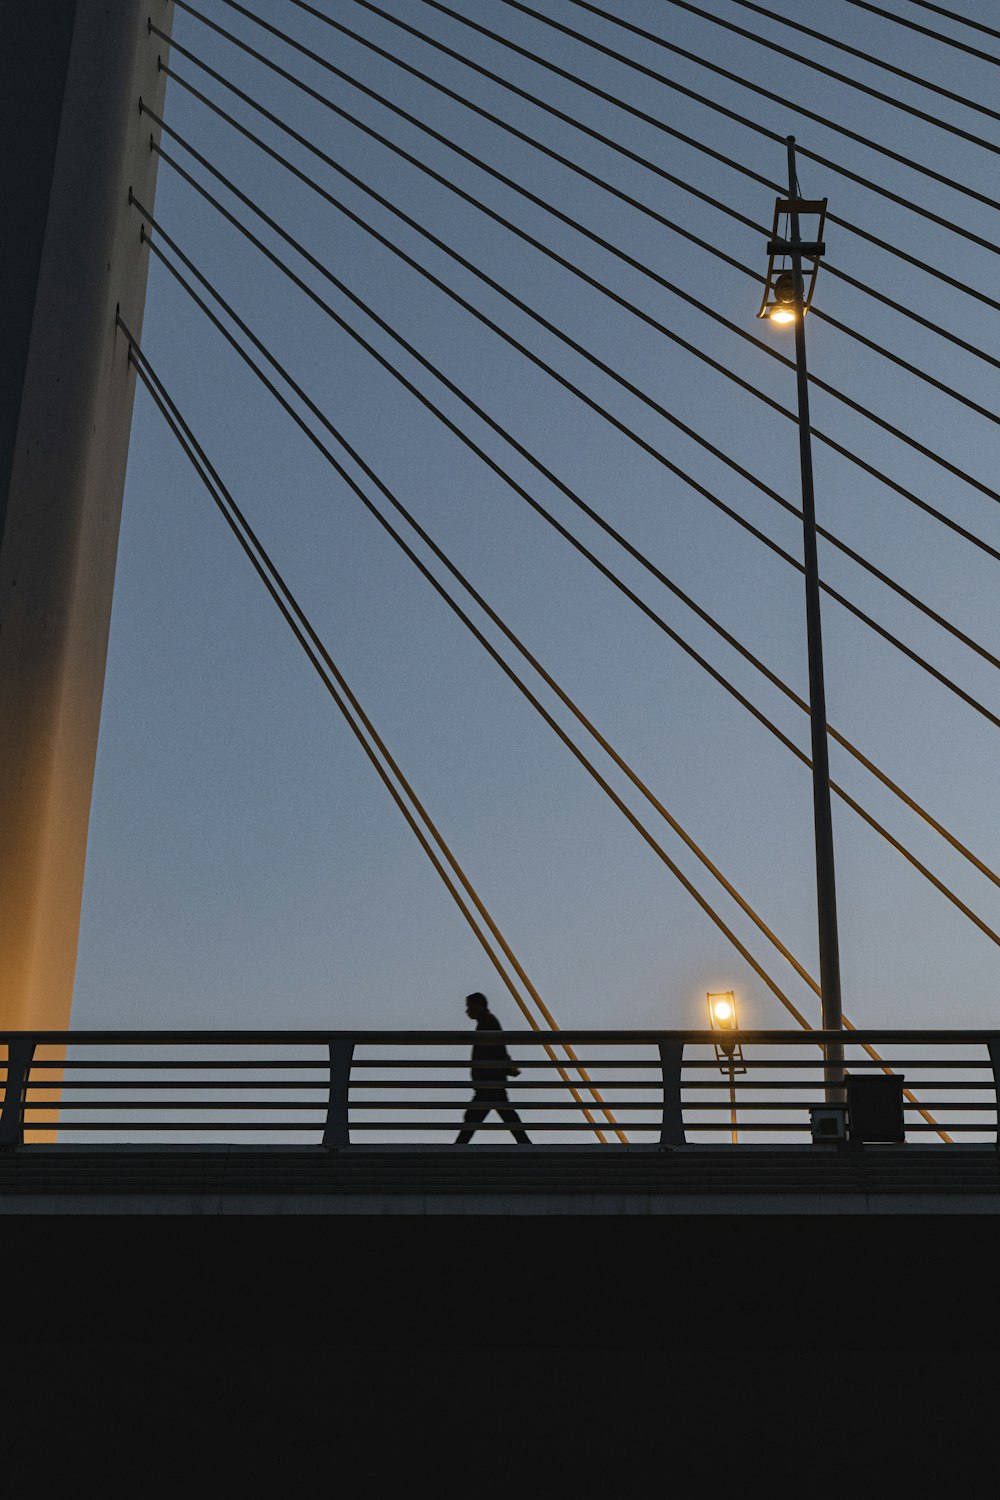 a person walking across a bridge at dusk